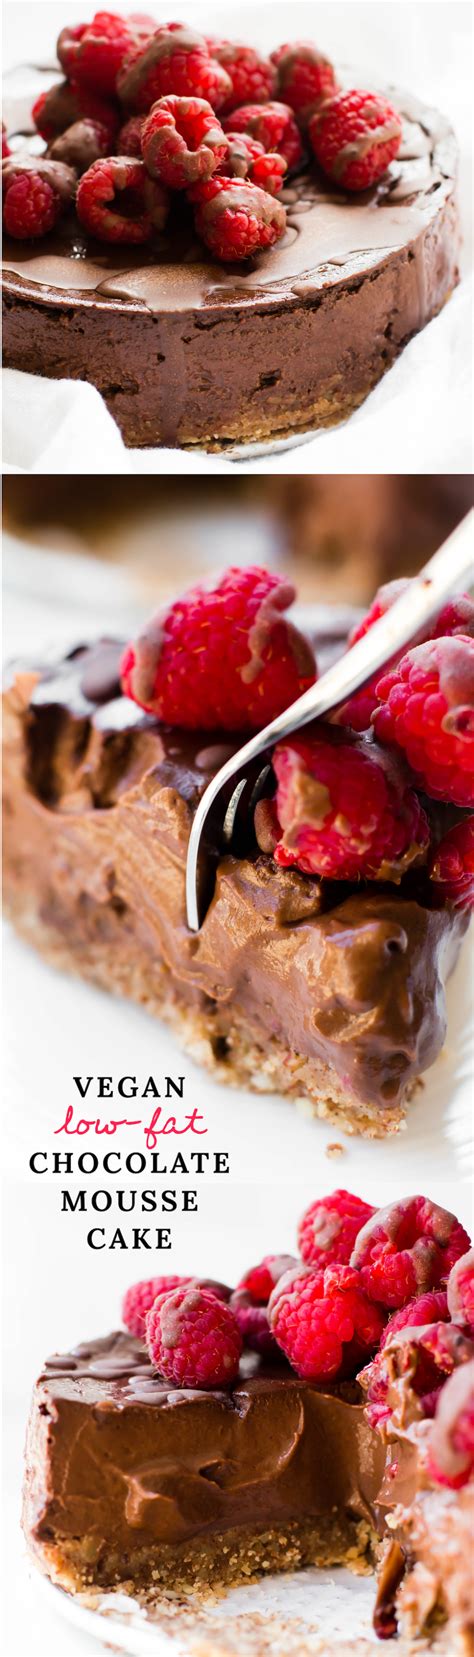 Cholesterol 2.5 mg 0 %. Low-Fat Chocolate Mousse Cake {Vegan & Gluten-Free}